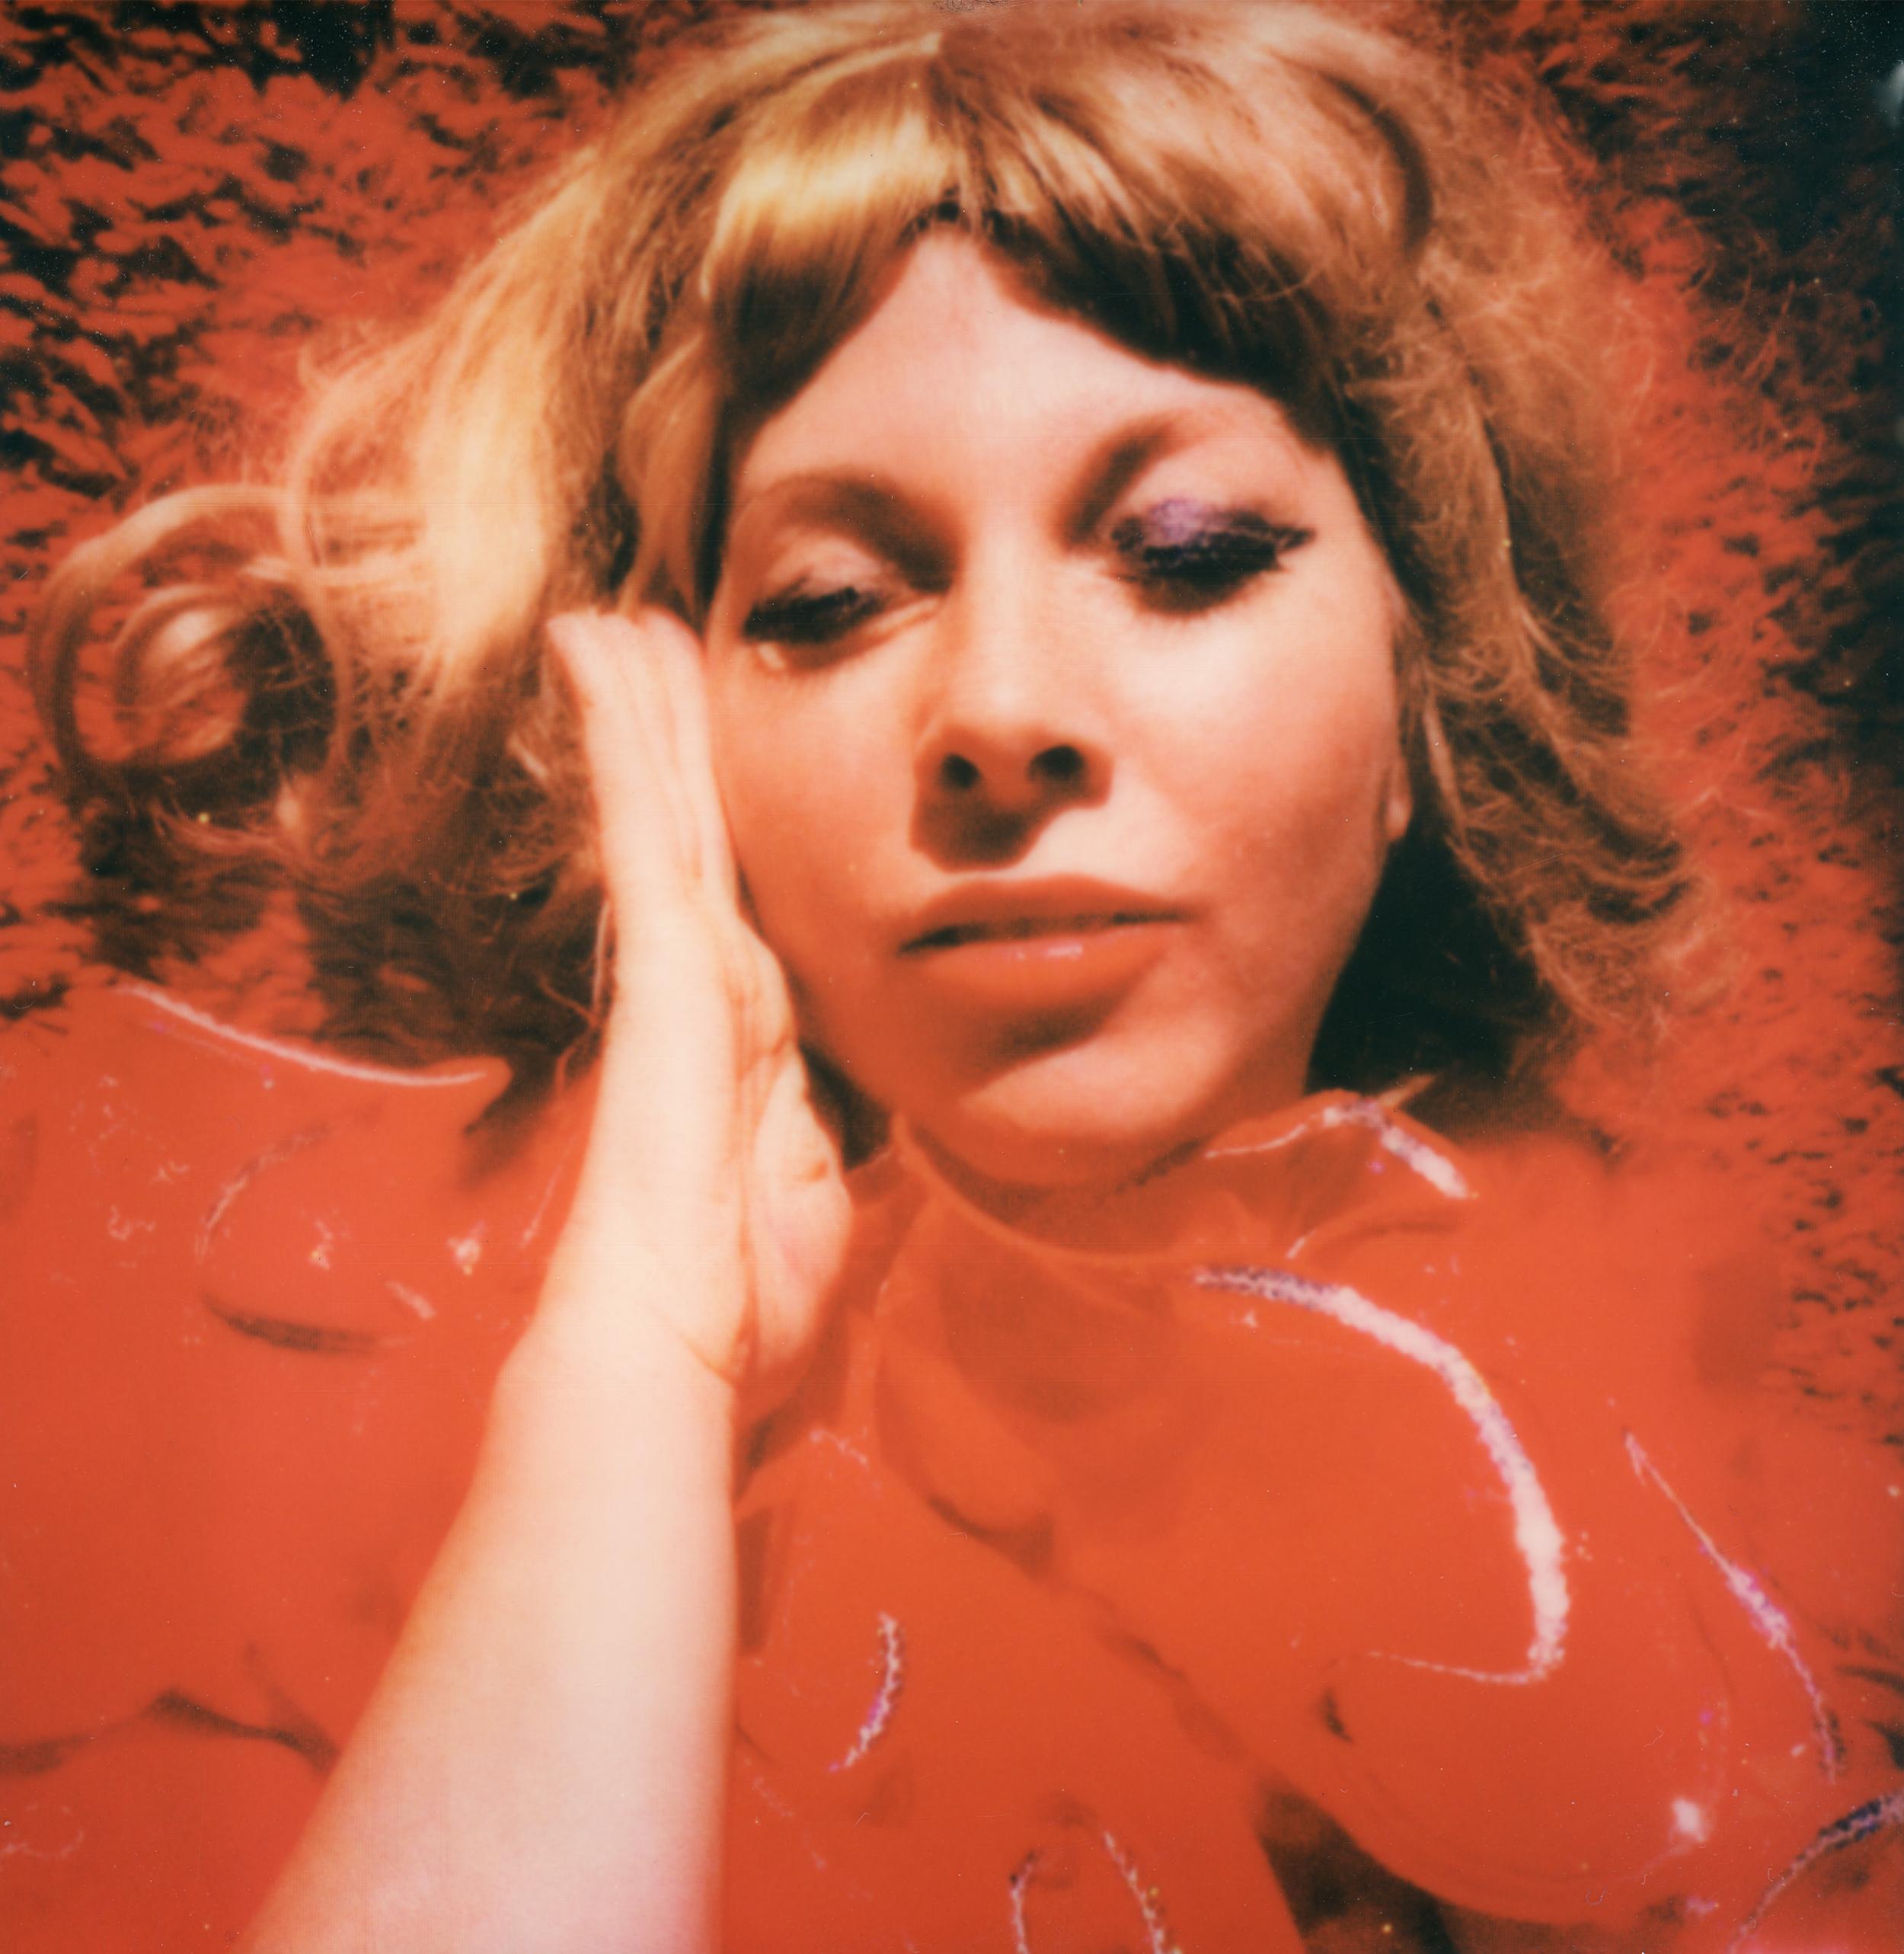 Figurative Photograph Clare Marie Bailey - Painted Red - Contemporary, Polaroid, Photograph, Figurative, Portrait